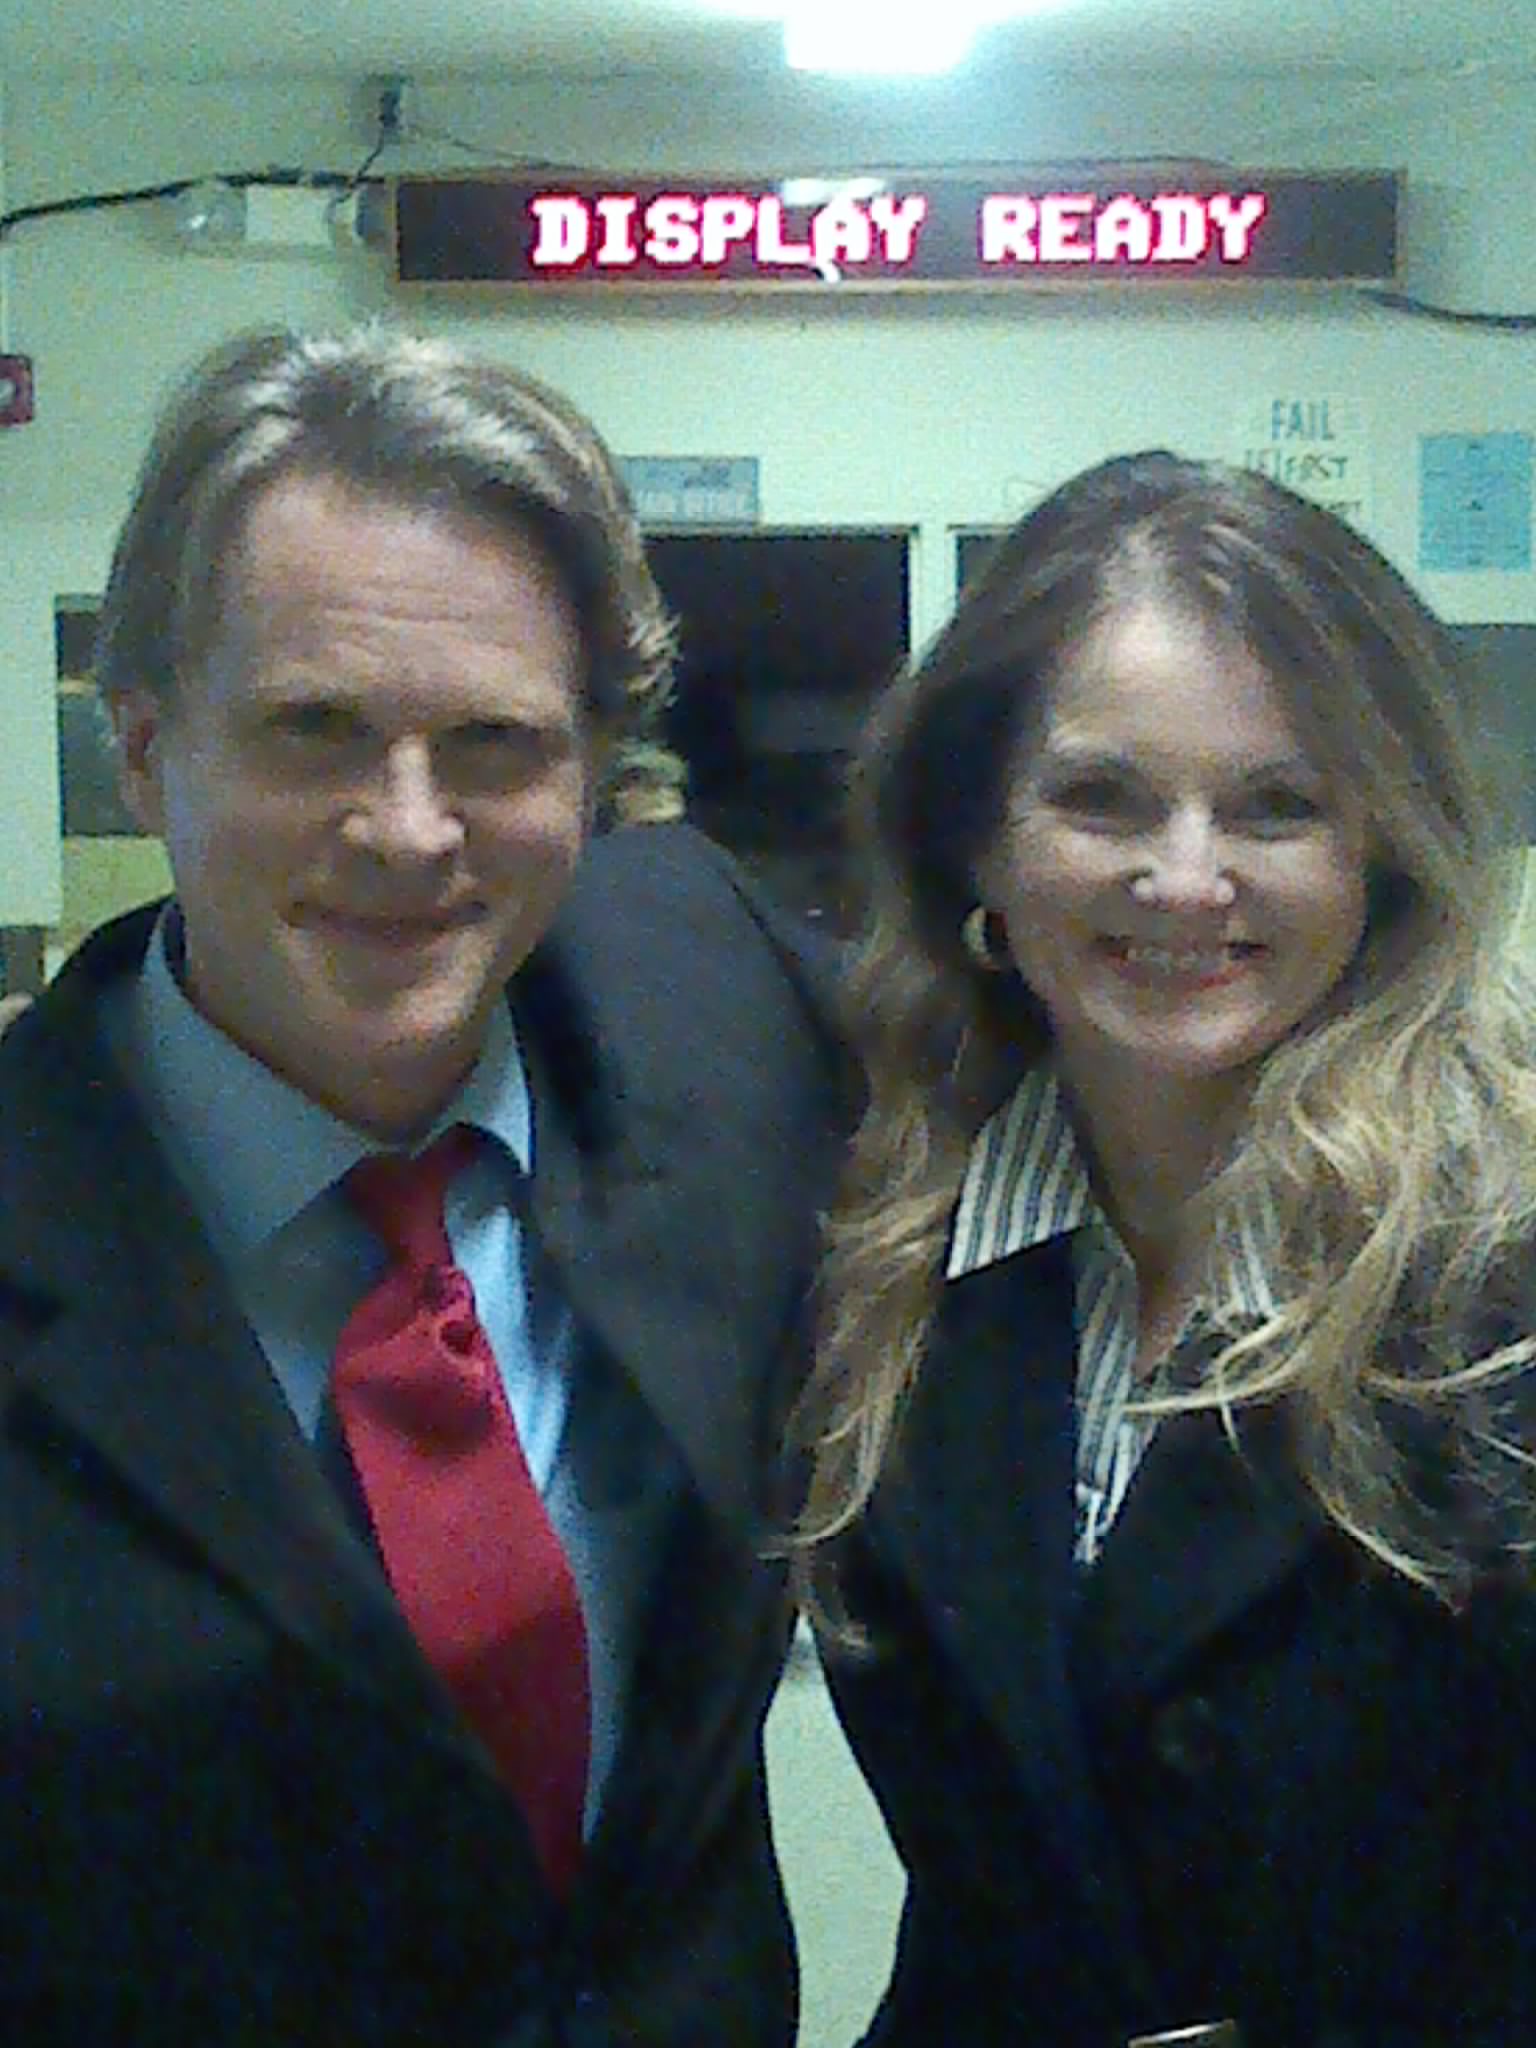 With Cary Elwes...so enjoyed his graciousness on set of H8RS. I played Angela Johnson